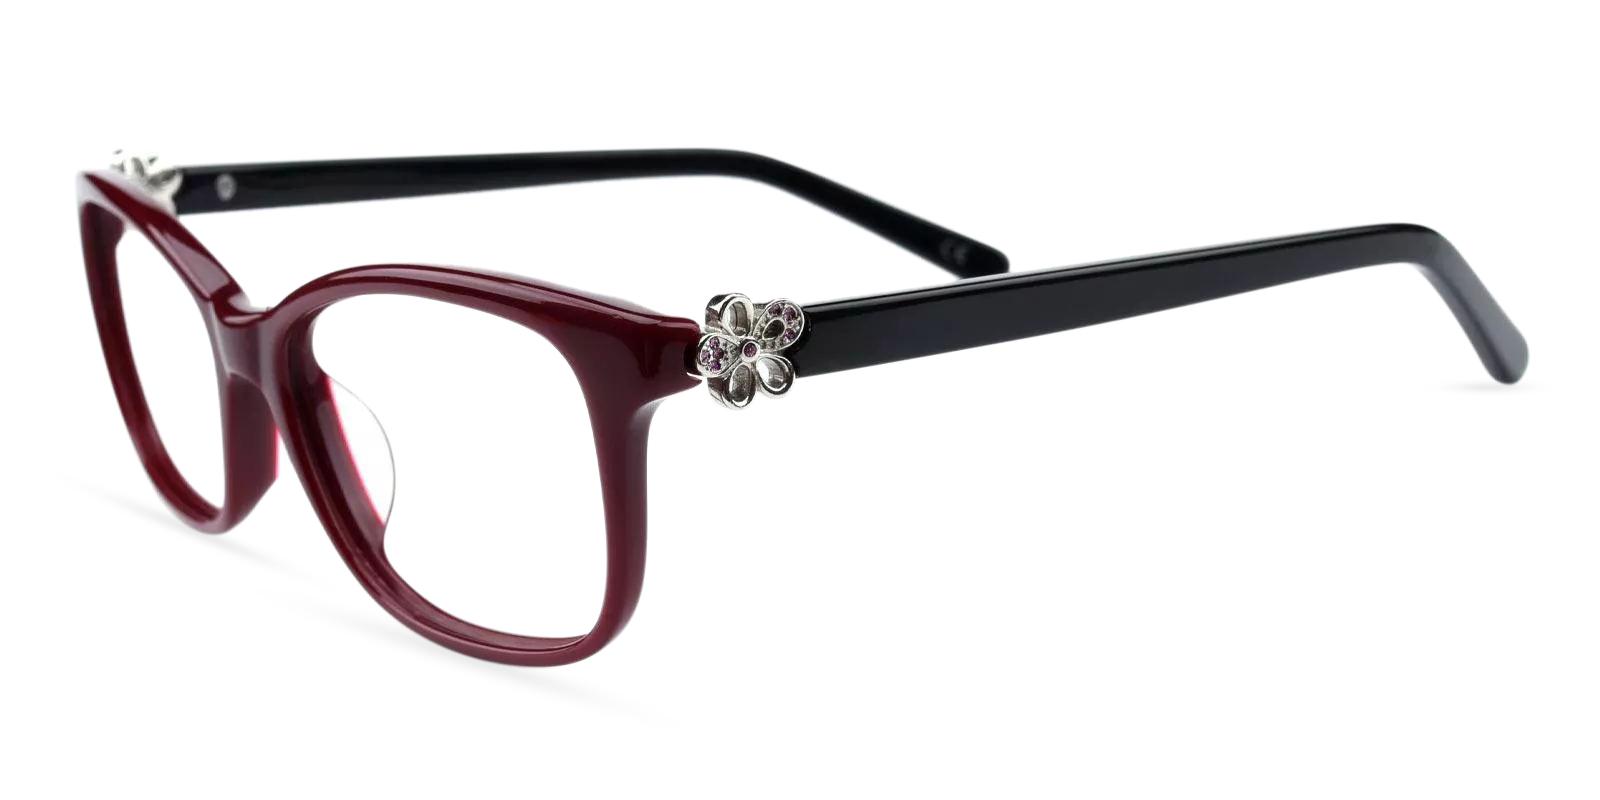 Paula Red Acetate Eyeglasses , Fashion , UniversalBridgeFit Frames from ABBE Glasses